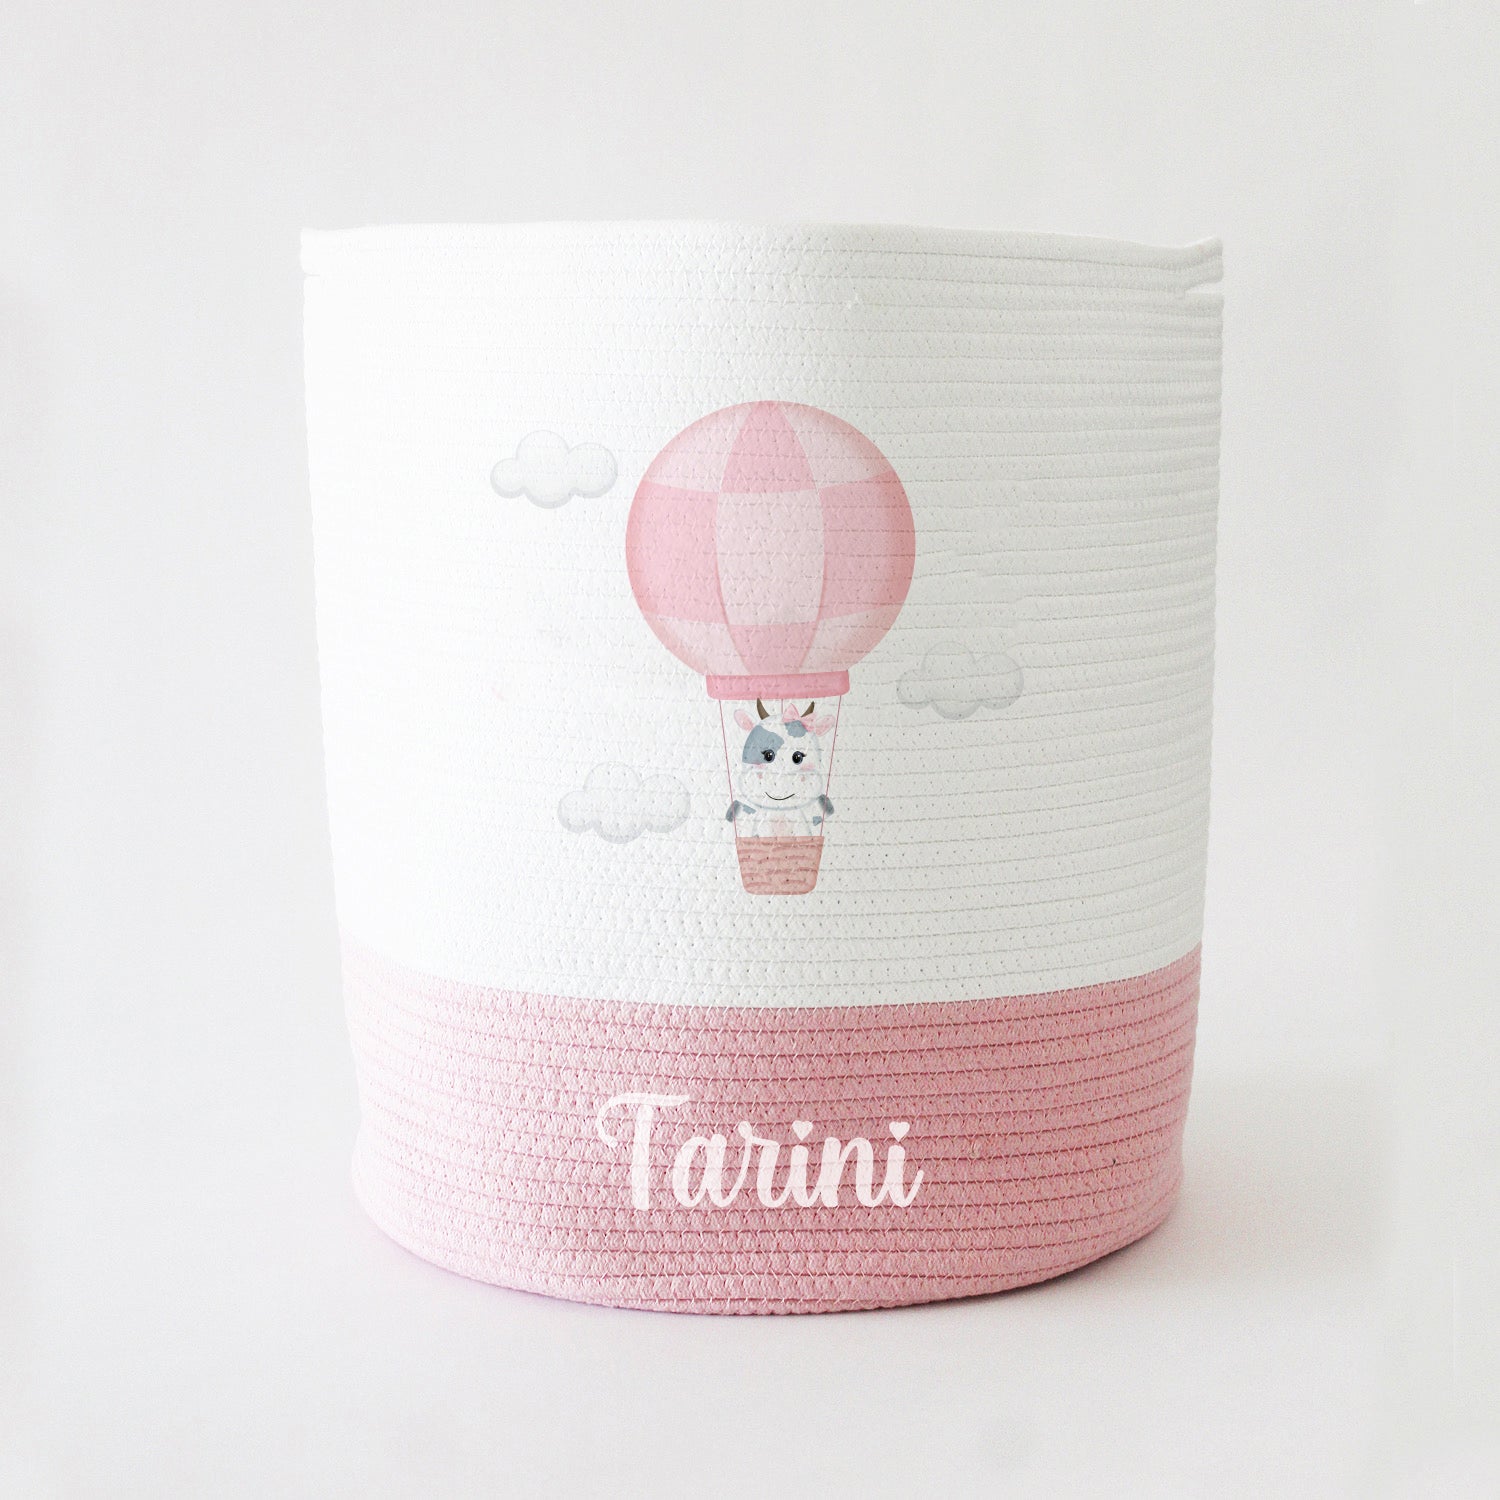 Personalized Storage Basket - Large - Hot Air Balloon Theme - Pink